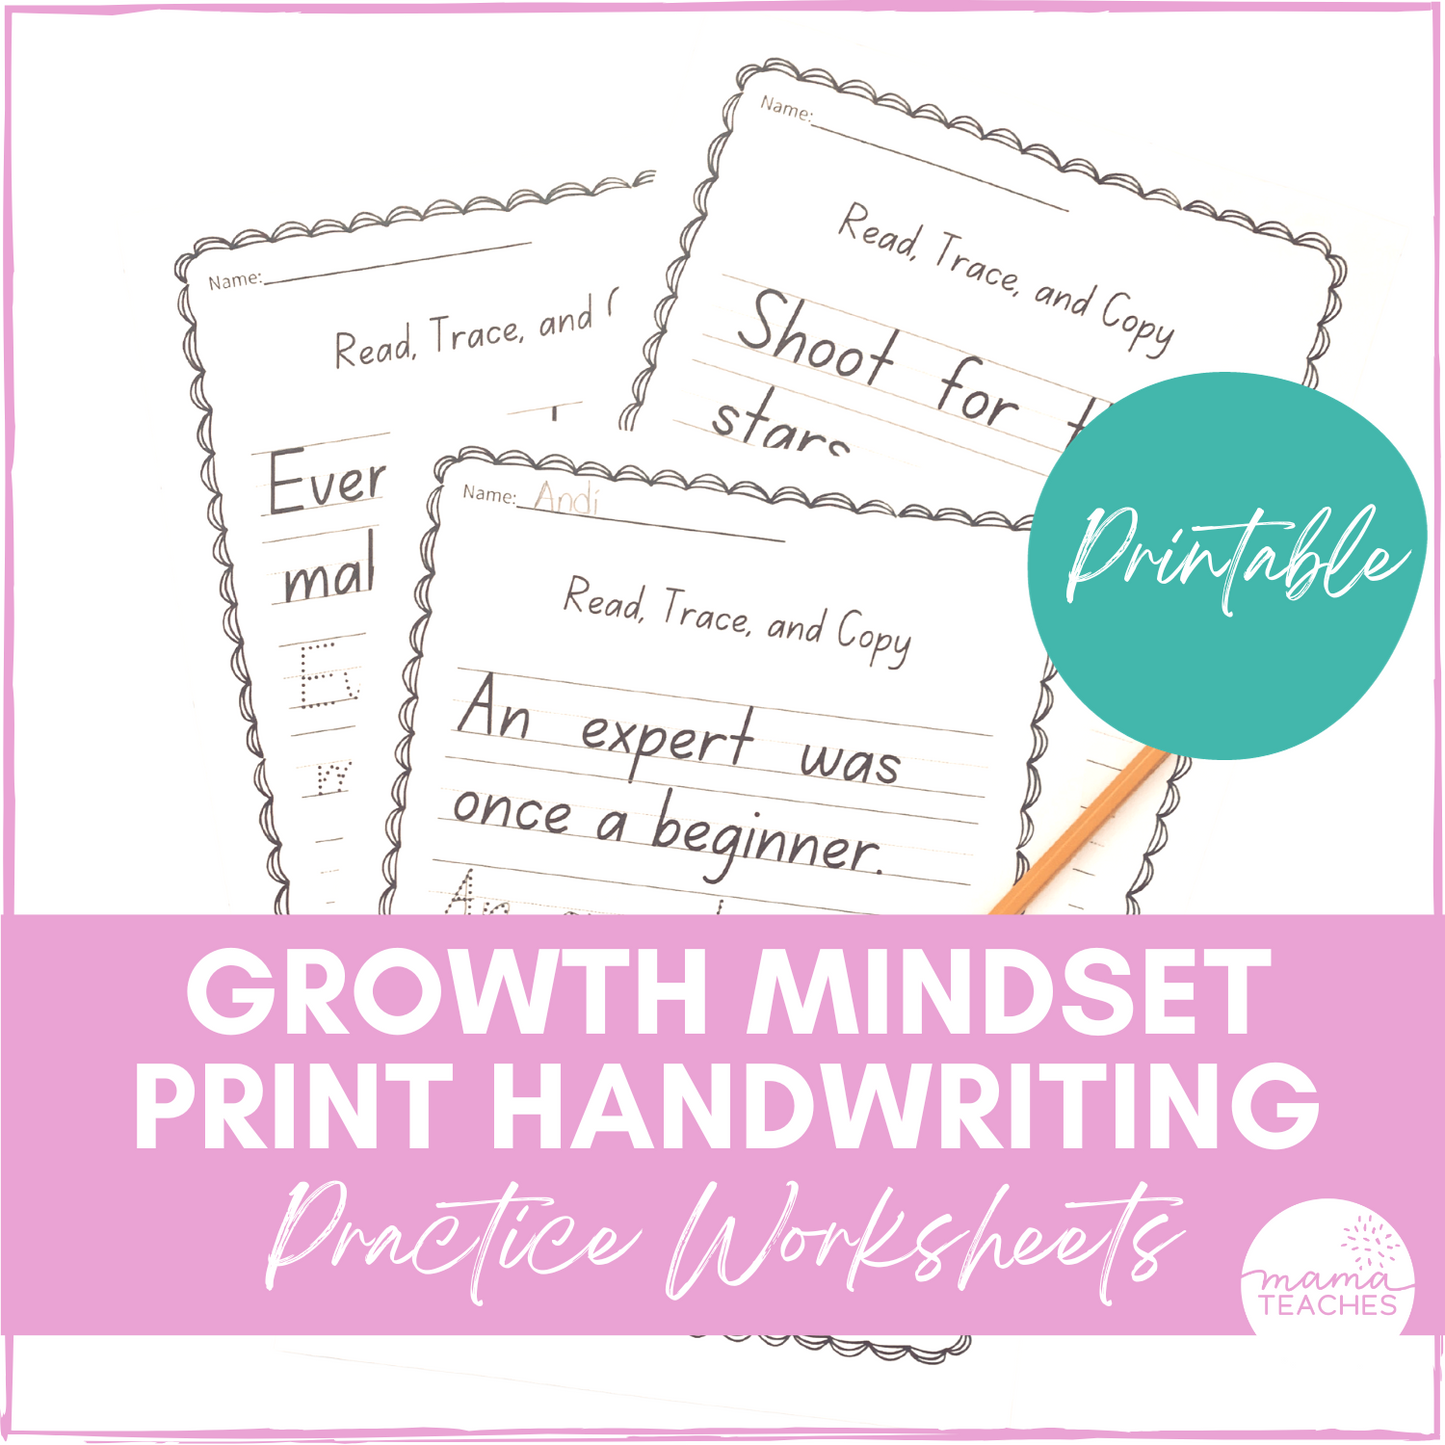 Growth Mindset Print Handwriting Practice